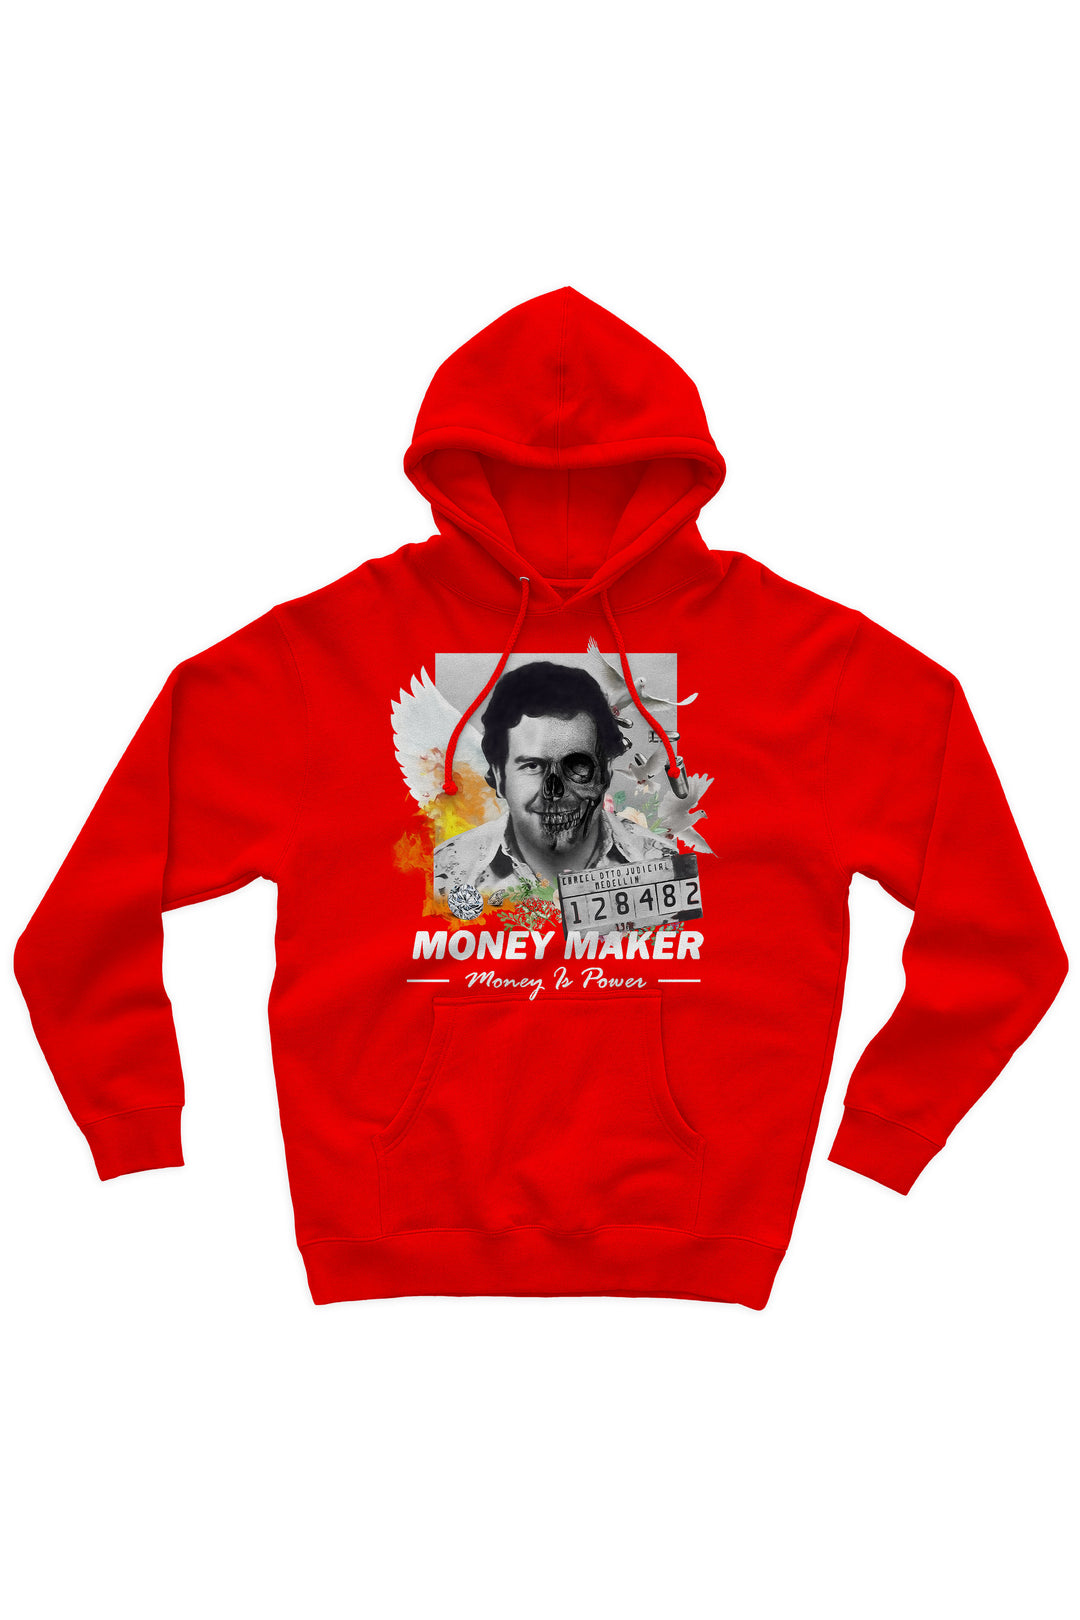 Official Money Maker Hoodie (Multi Color Logo) - Zamage